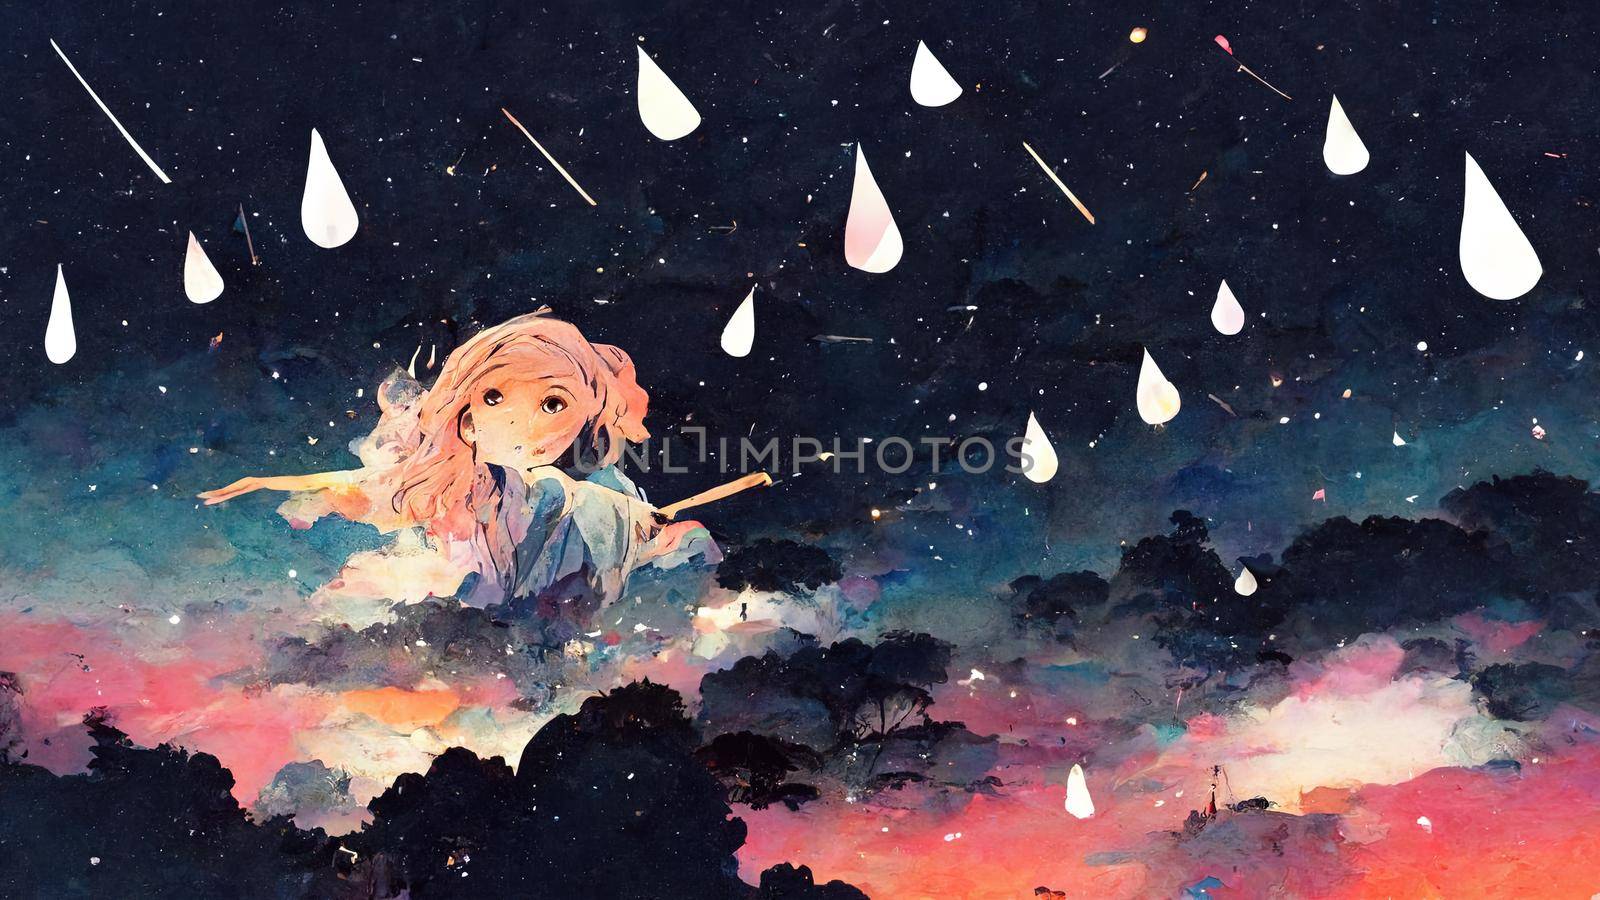 Night Sky with Falling Rain and Umbrella Girl Illustration anime style. High quality illustration